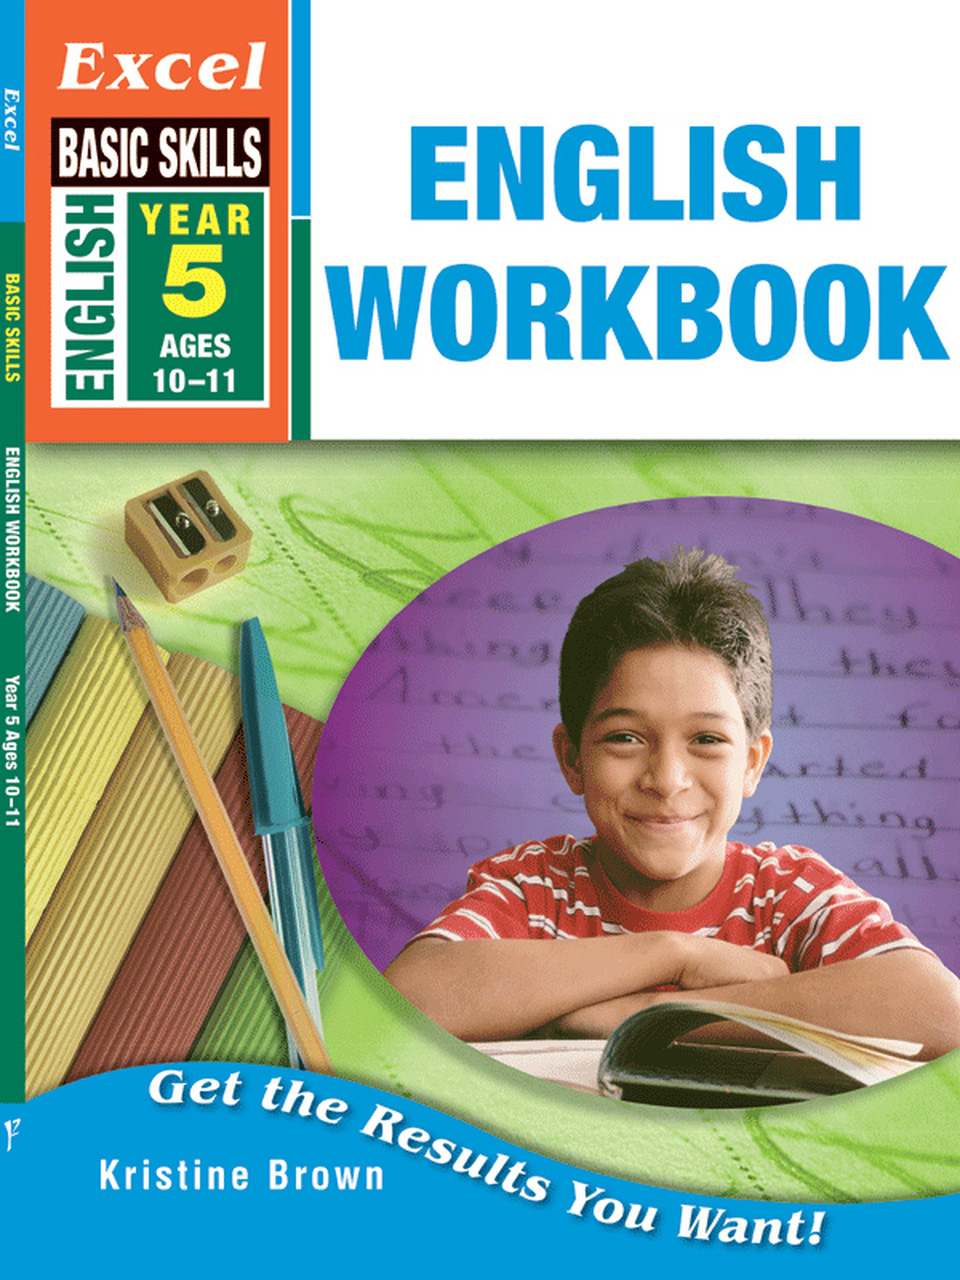 excel-basic-skills-english-workbook-year-5